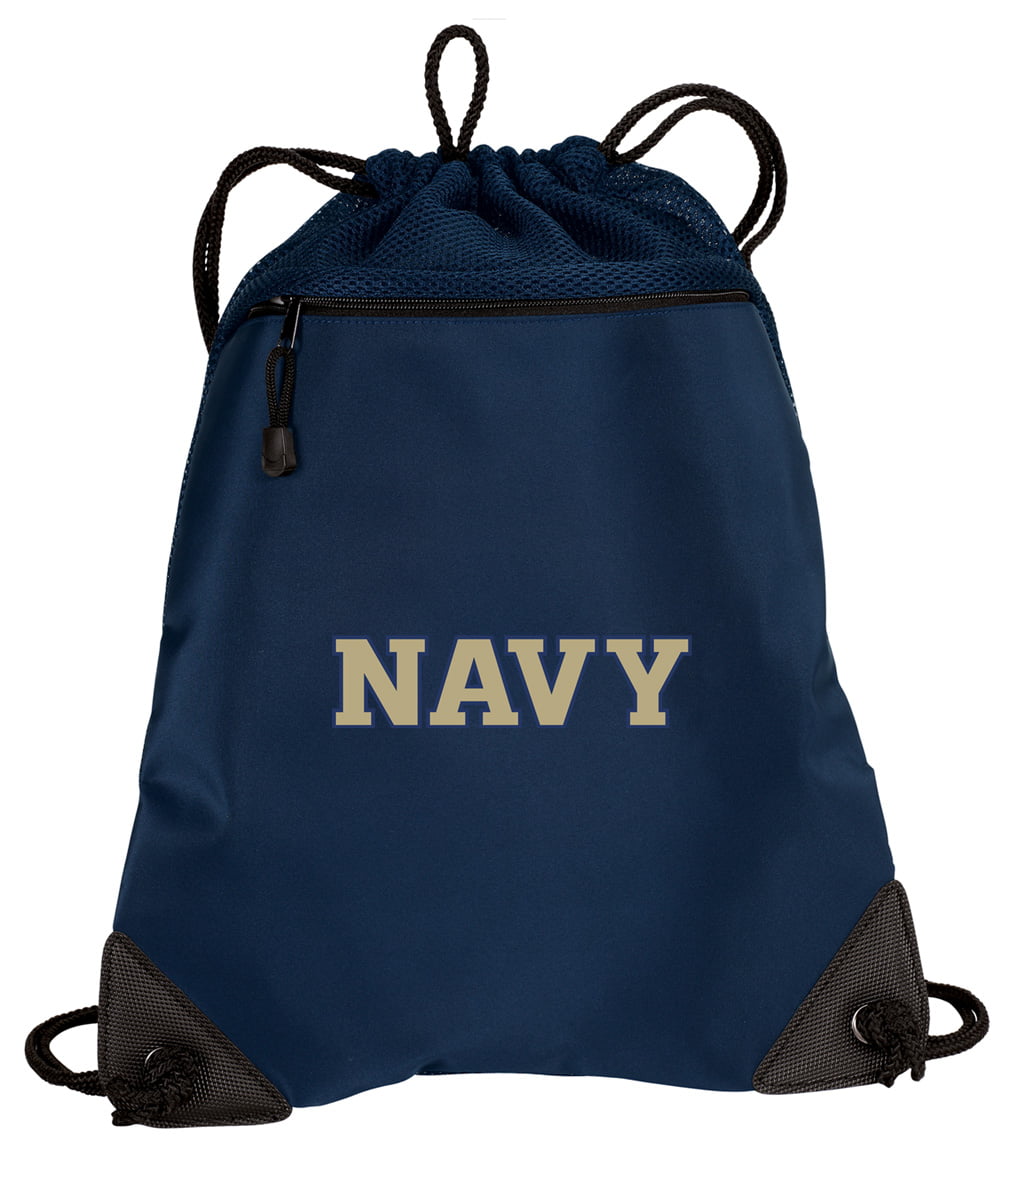 USNA Navy Drawstring Bag Naval Academy Cinch Backpack UNIQUE MESH & MICROFIBER